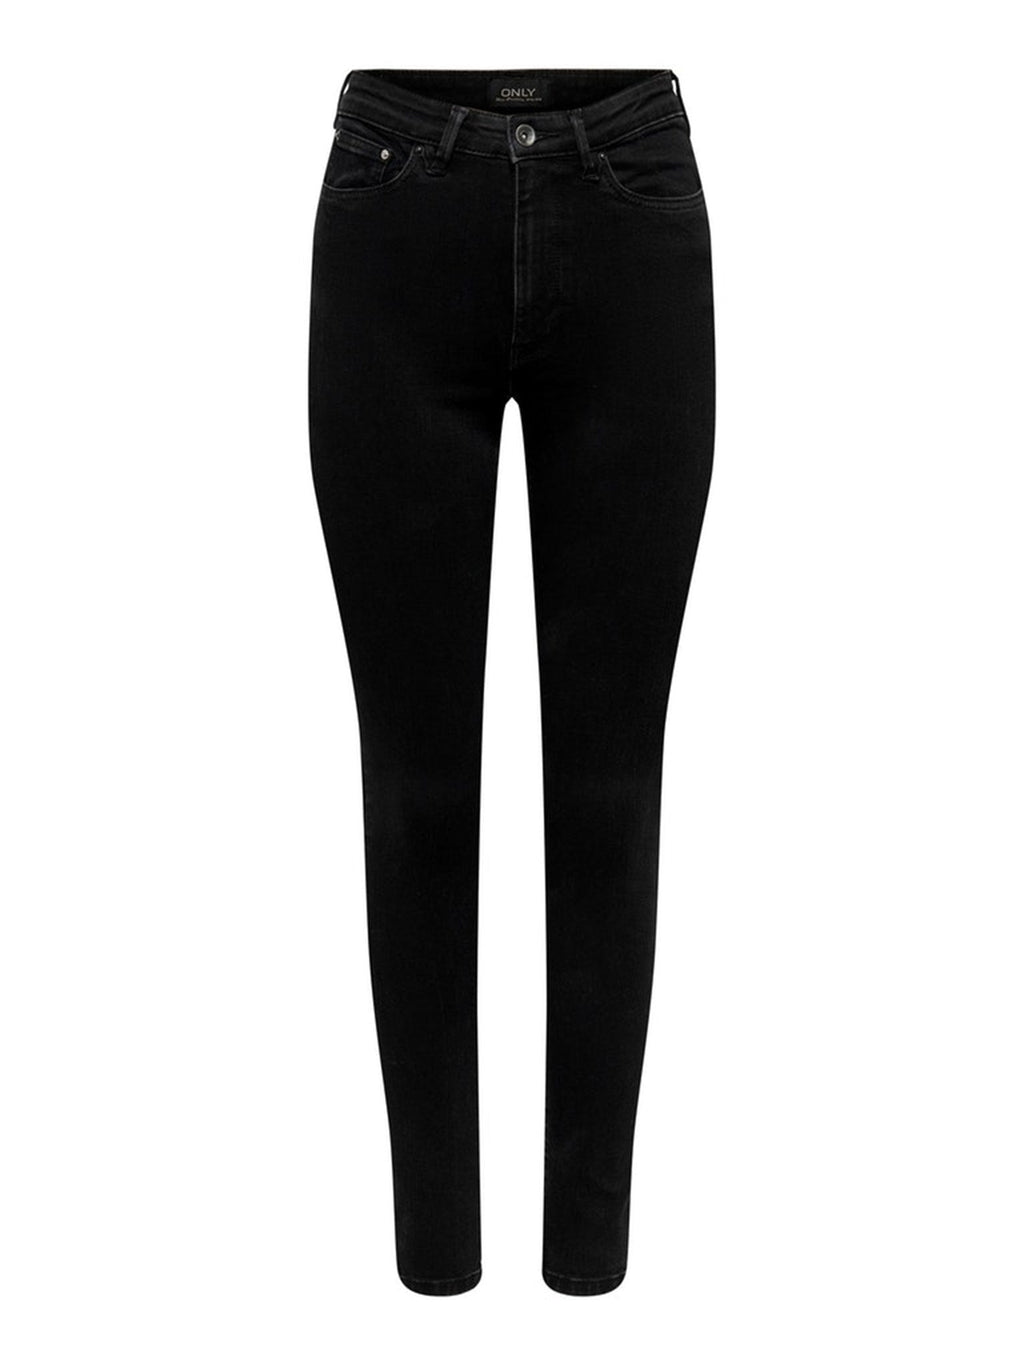 Jeans icónicos Highwaist - Negro